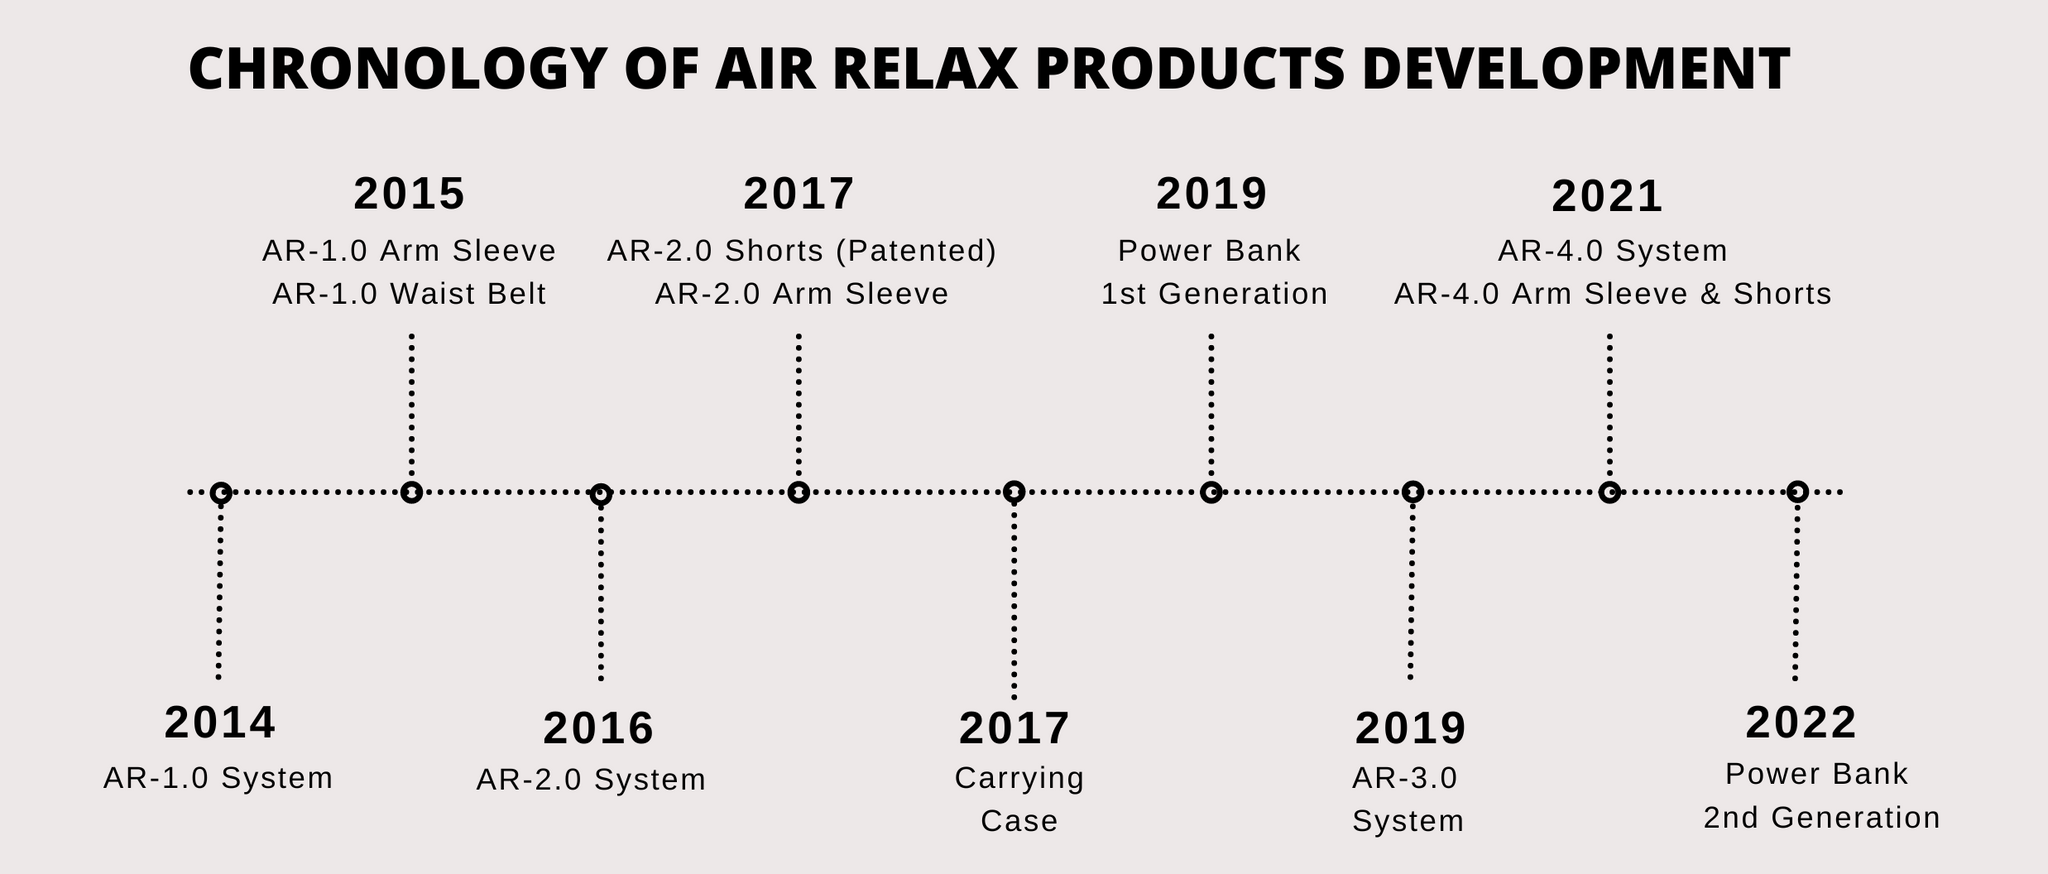 AIR RELAX AR-3.0 & AR-4.0 POWER BANK (2nd Generation)